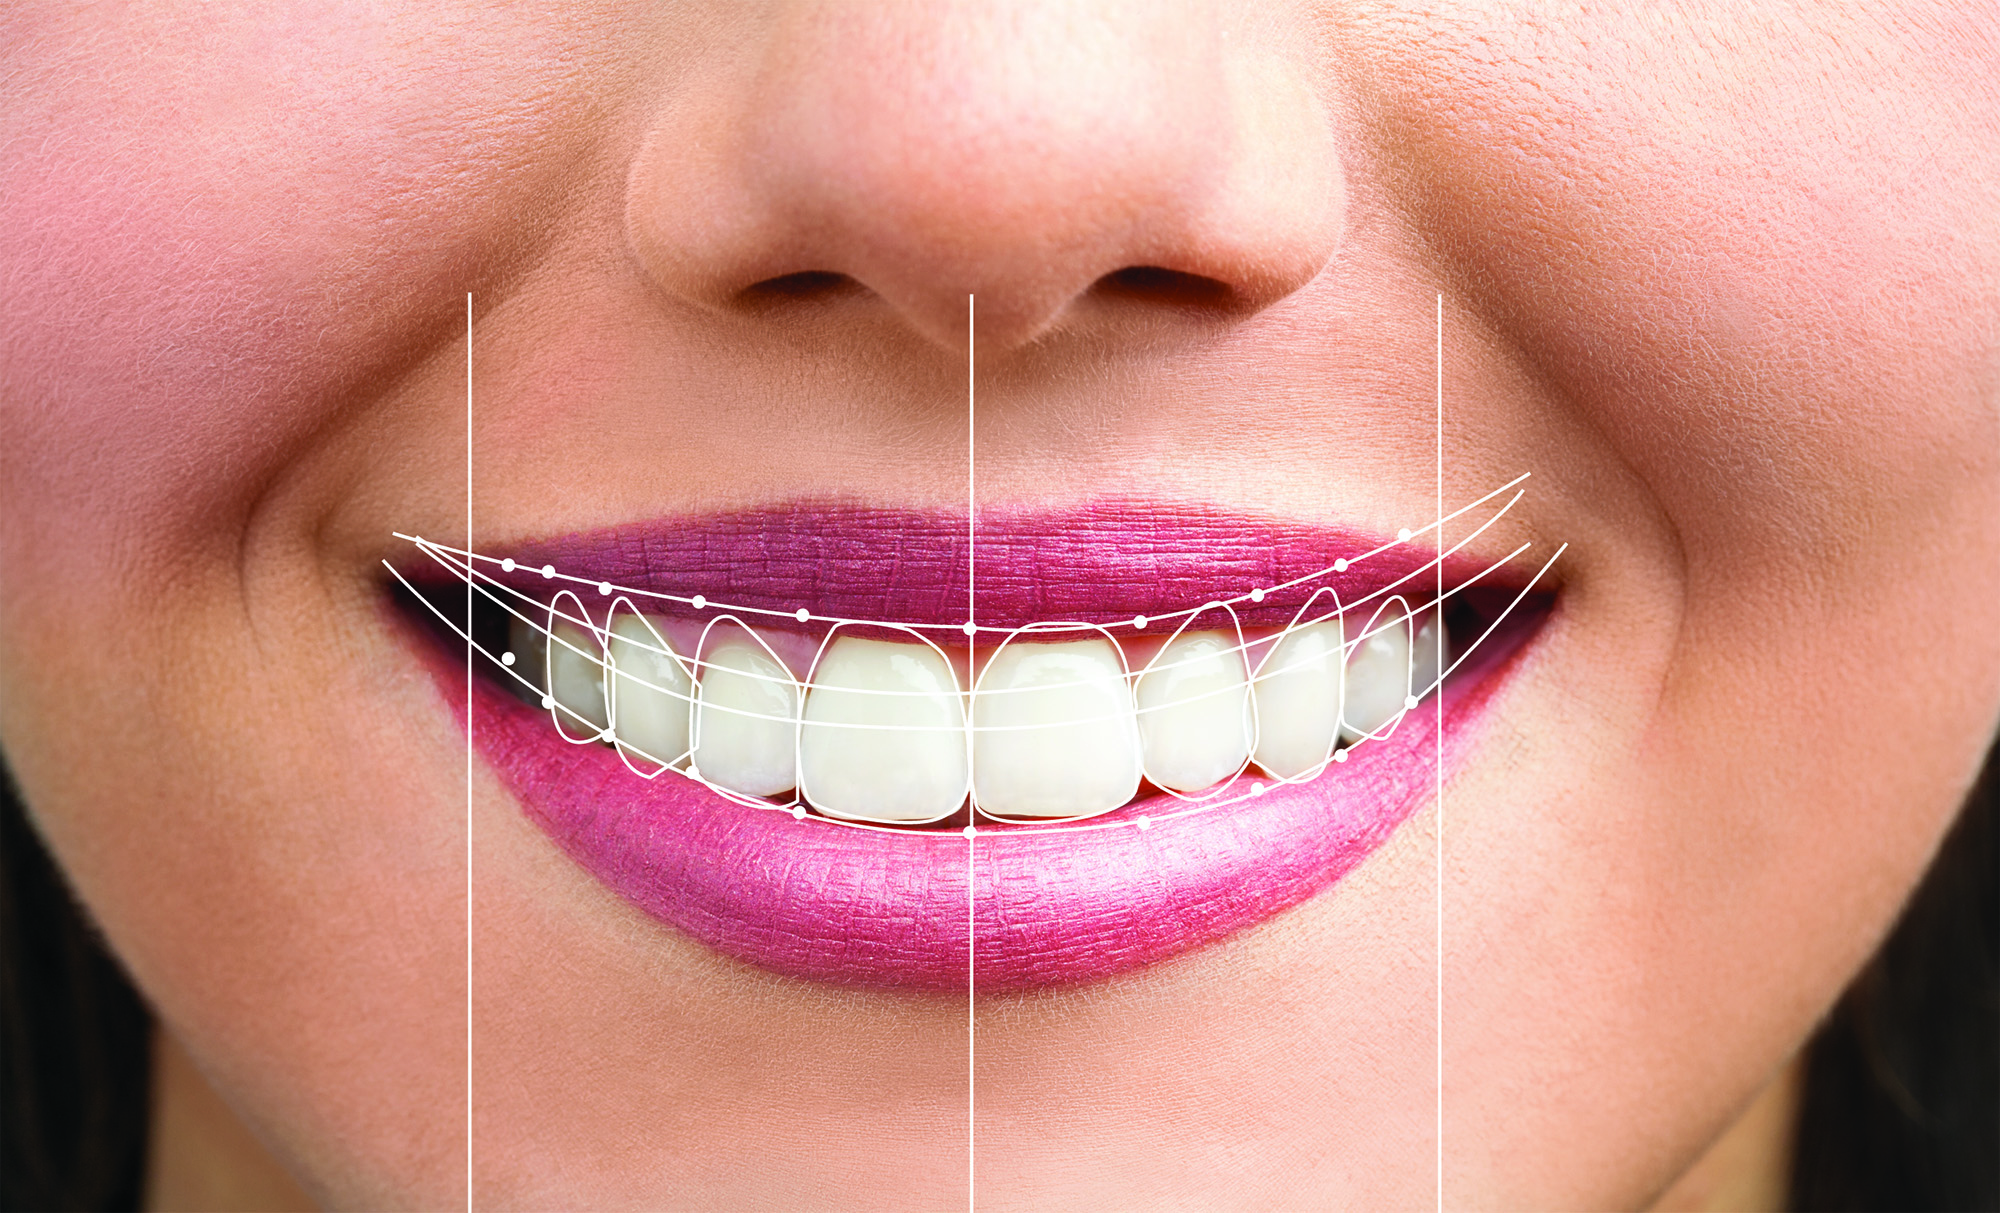 Digital Smile Designing — Cusp Dental And Maxillofacial Centre